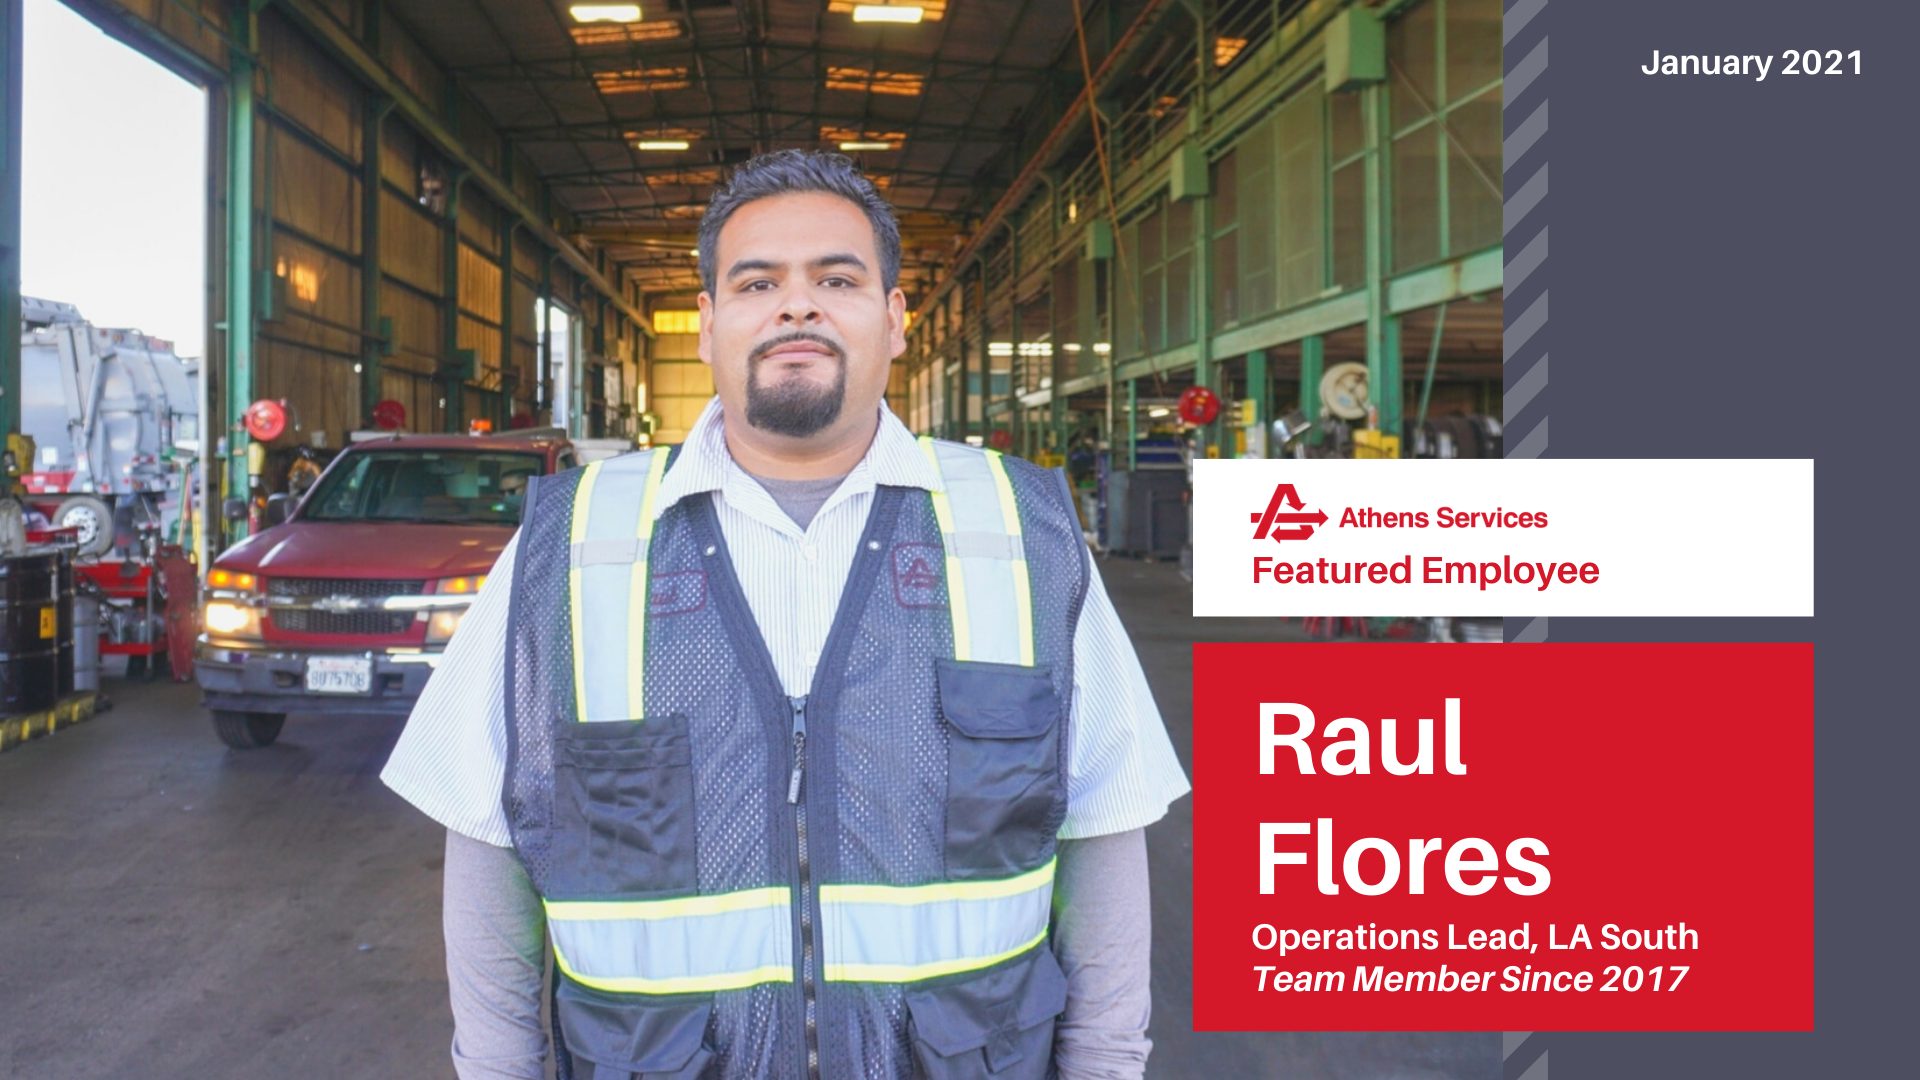 11Raul Flores Employee Highlight (1)